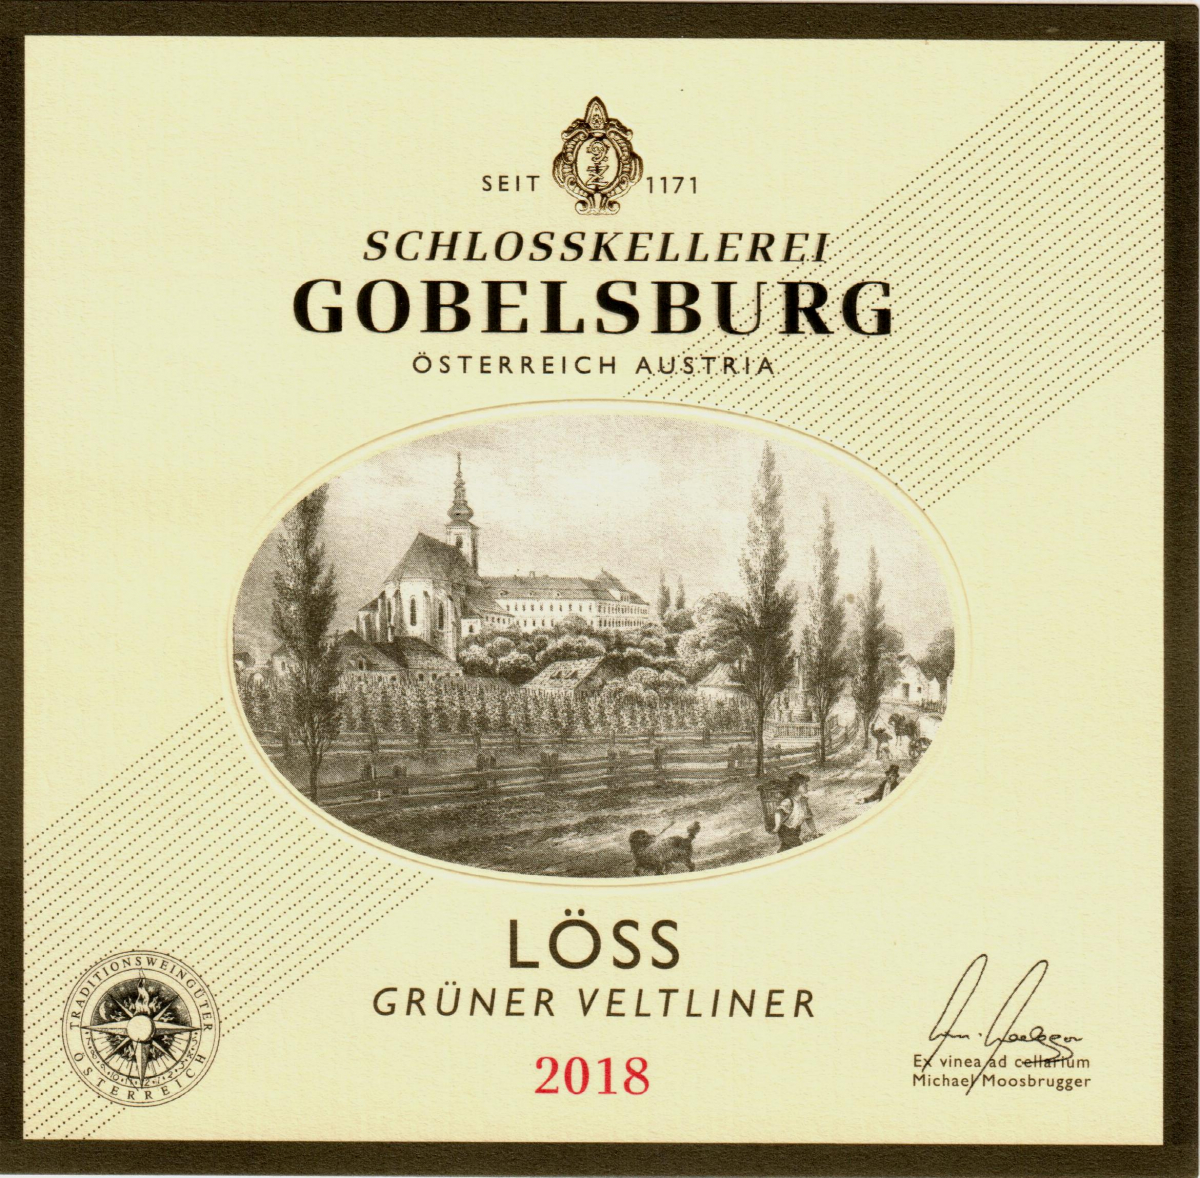 Label Schlosskellerei Gobelsburg